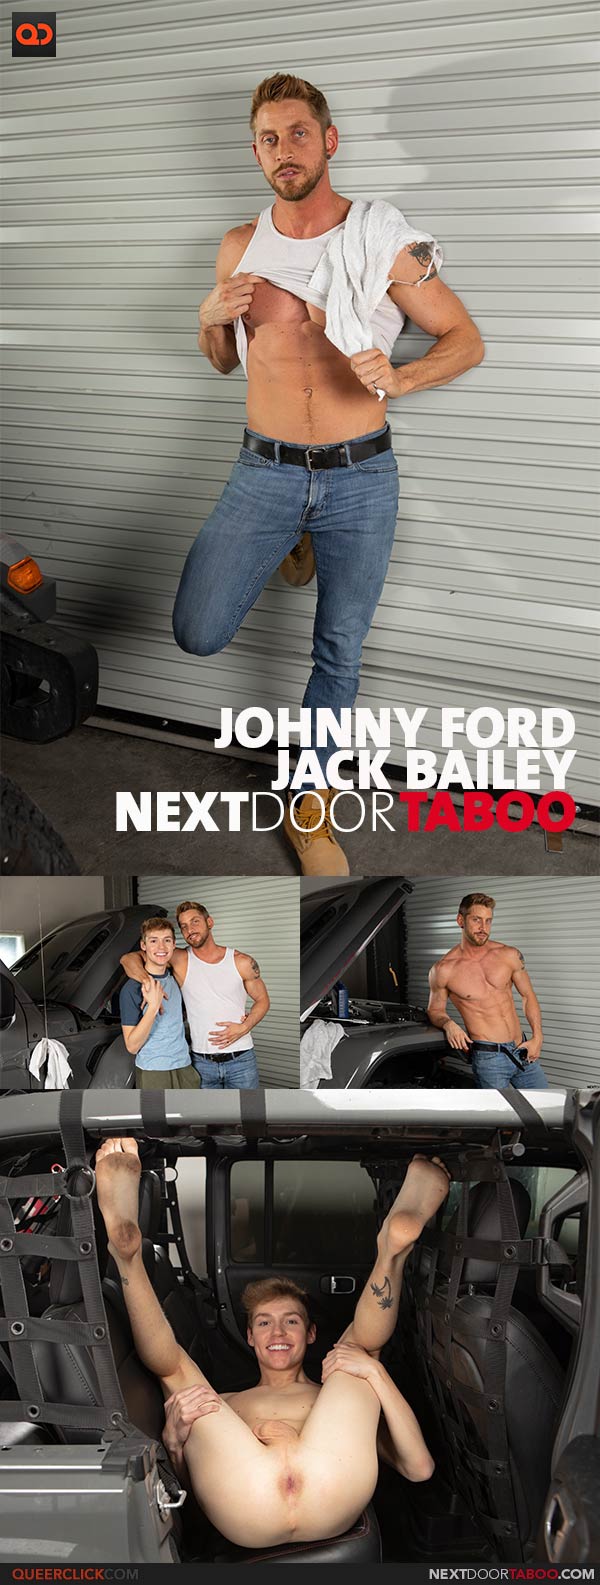 NextDoorTaboo: Johnny Ford and Jack Bailey